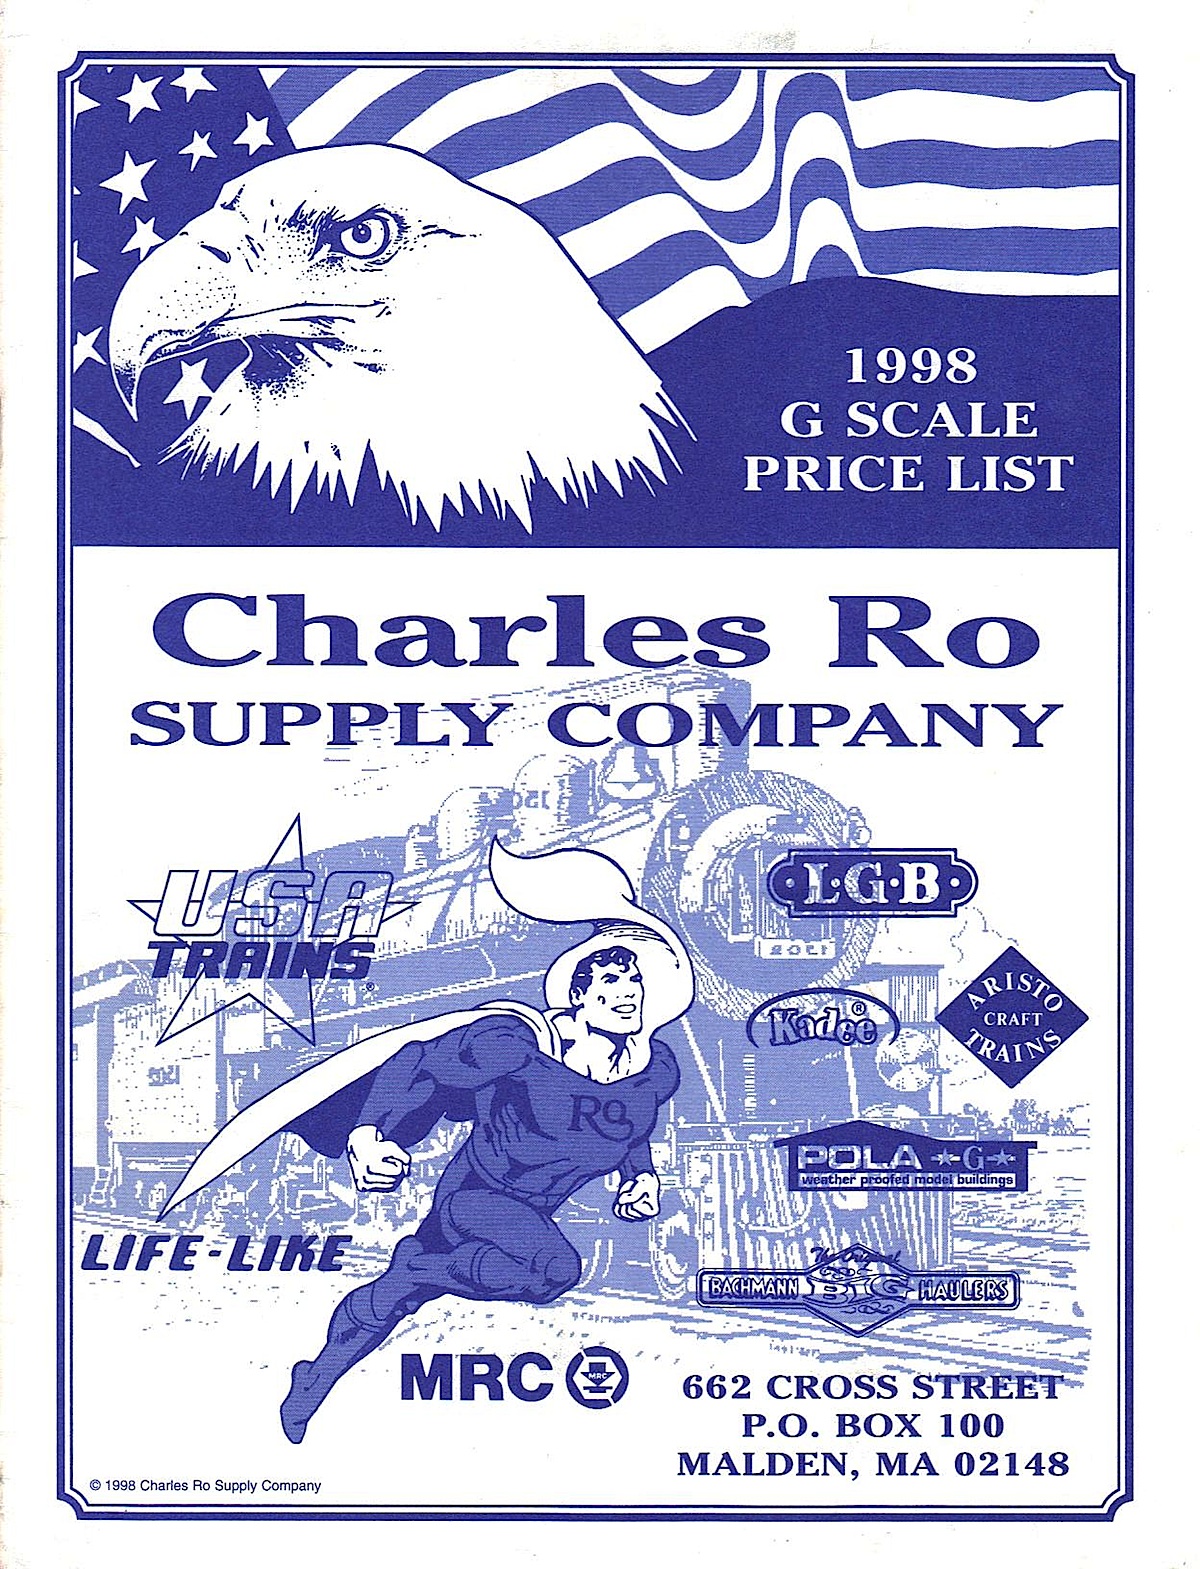 Charles Ro Preisliste 1998 (Charles Ro price list 1998)